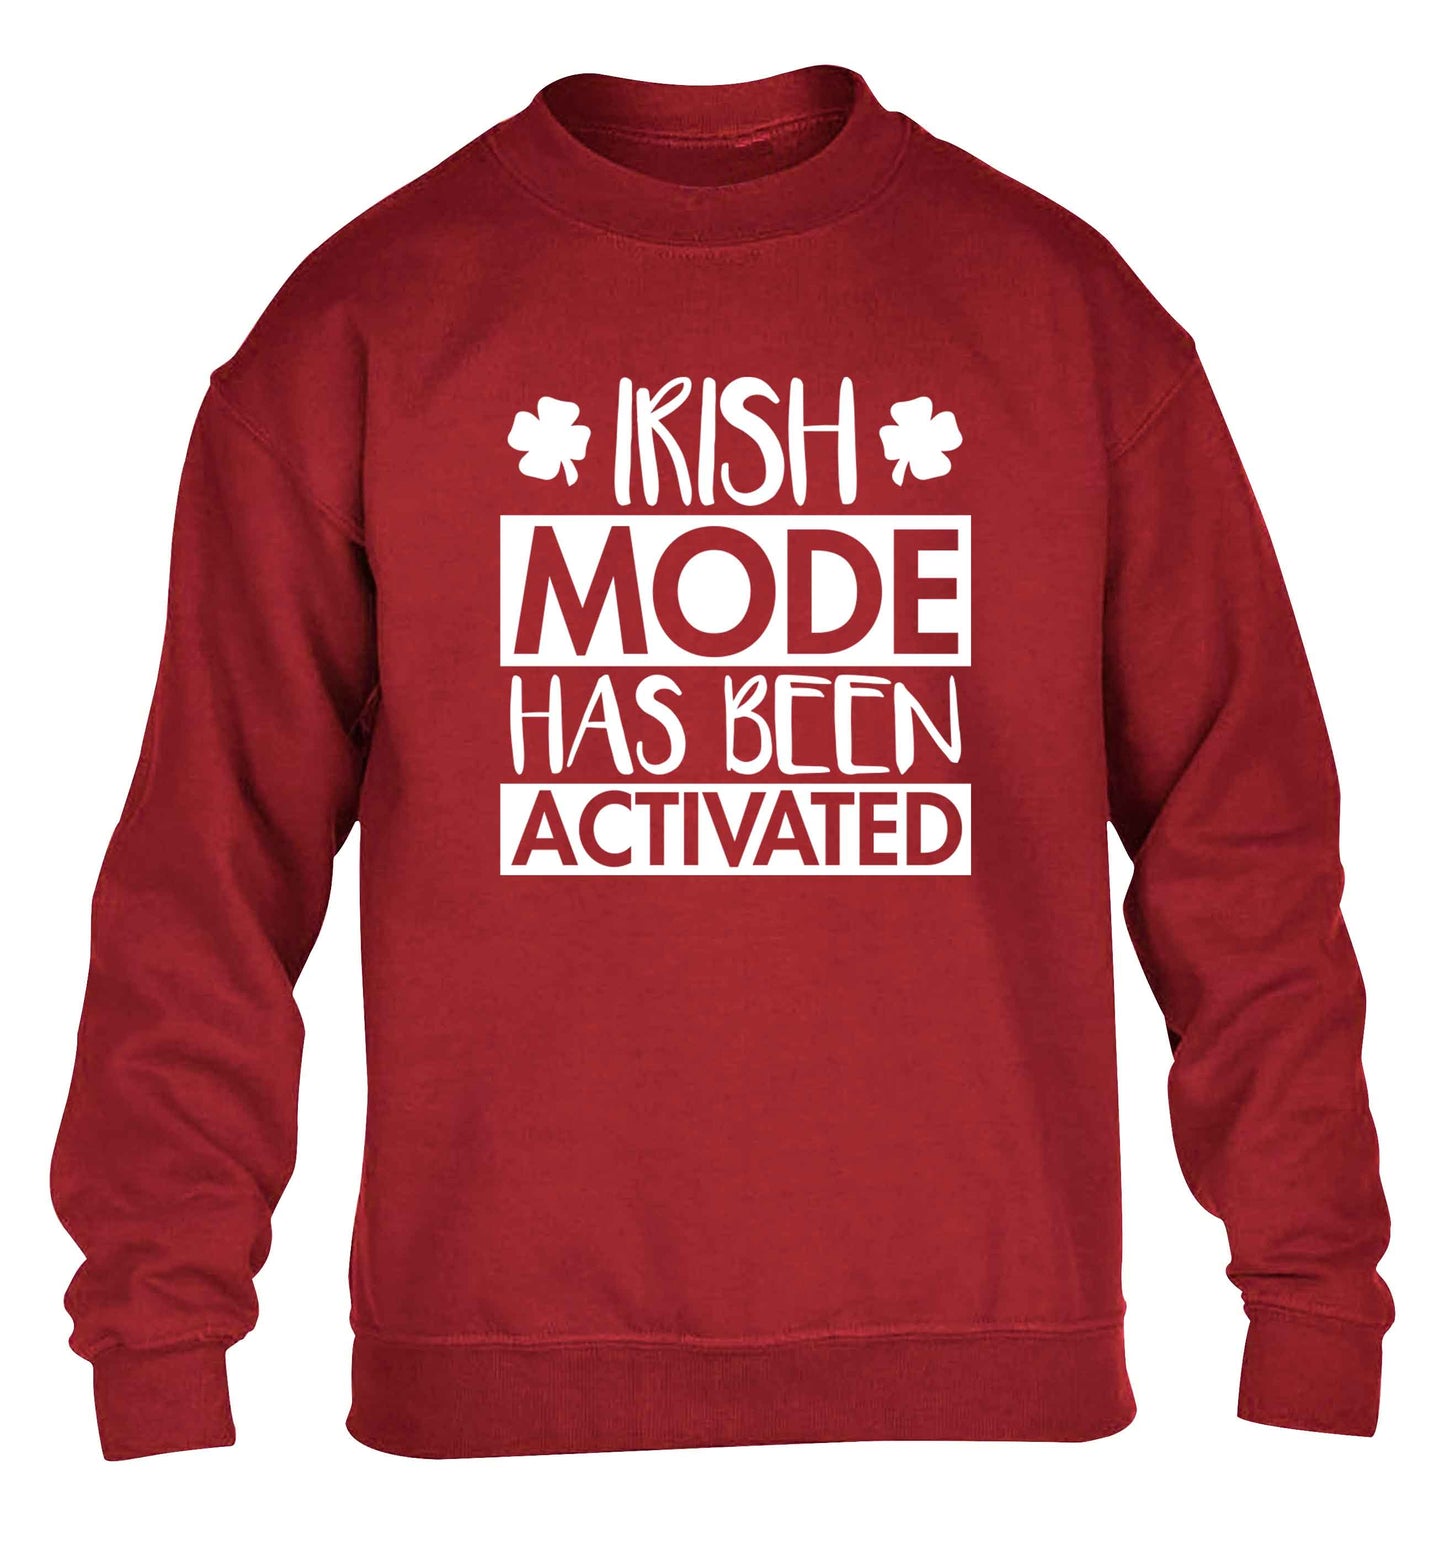 Irish mode has been activated children's grey sweater 12-13 Years